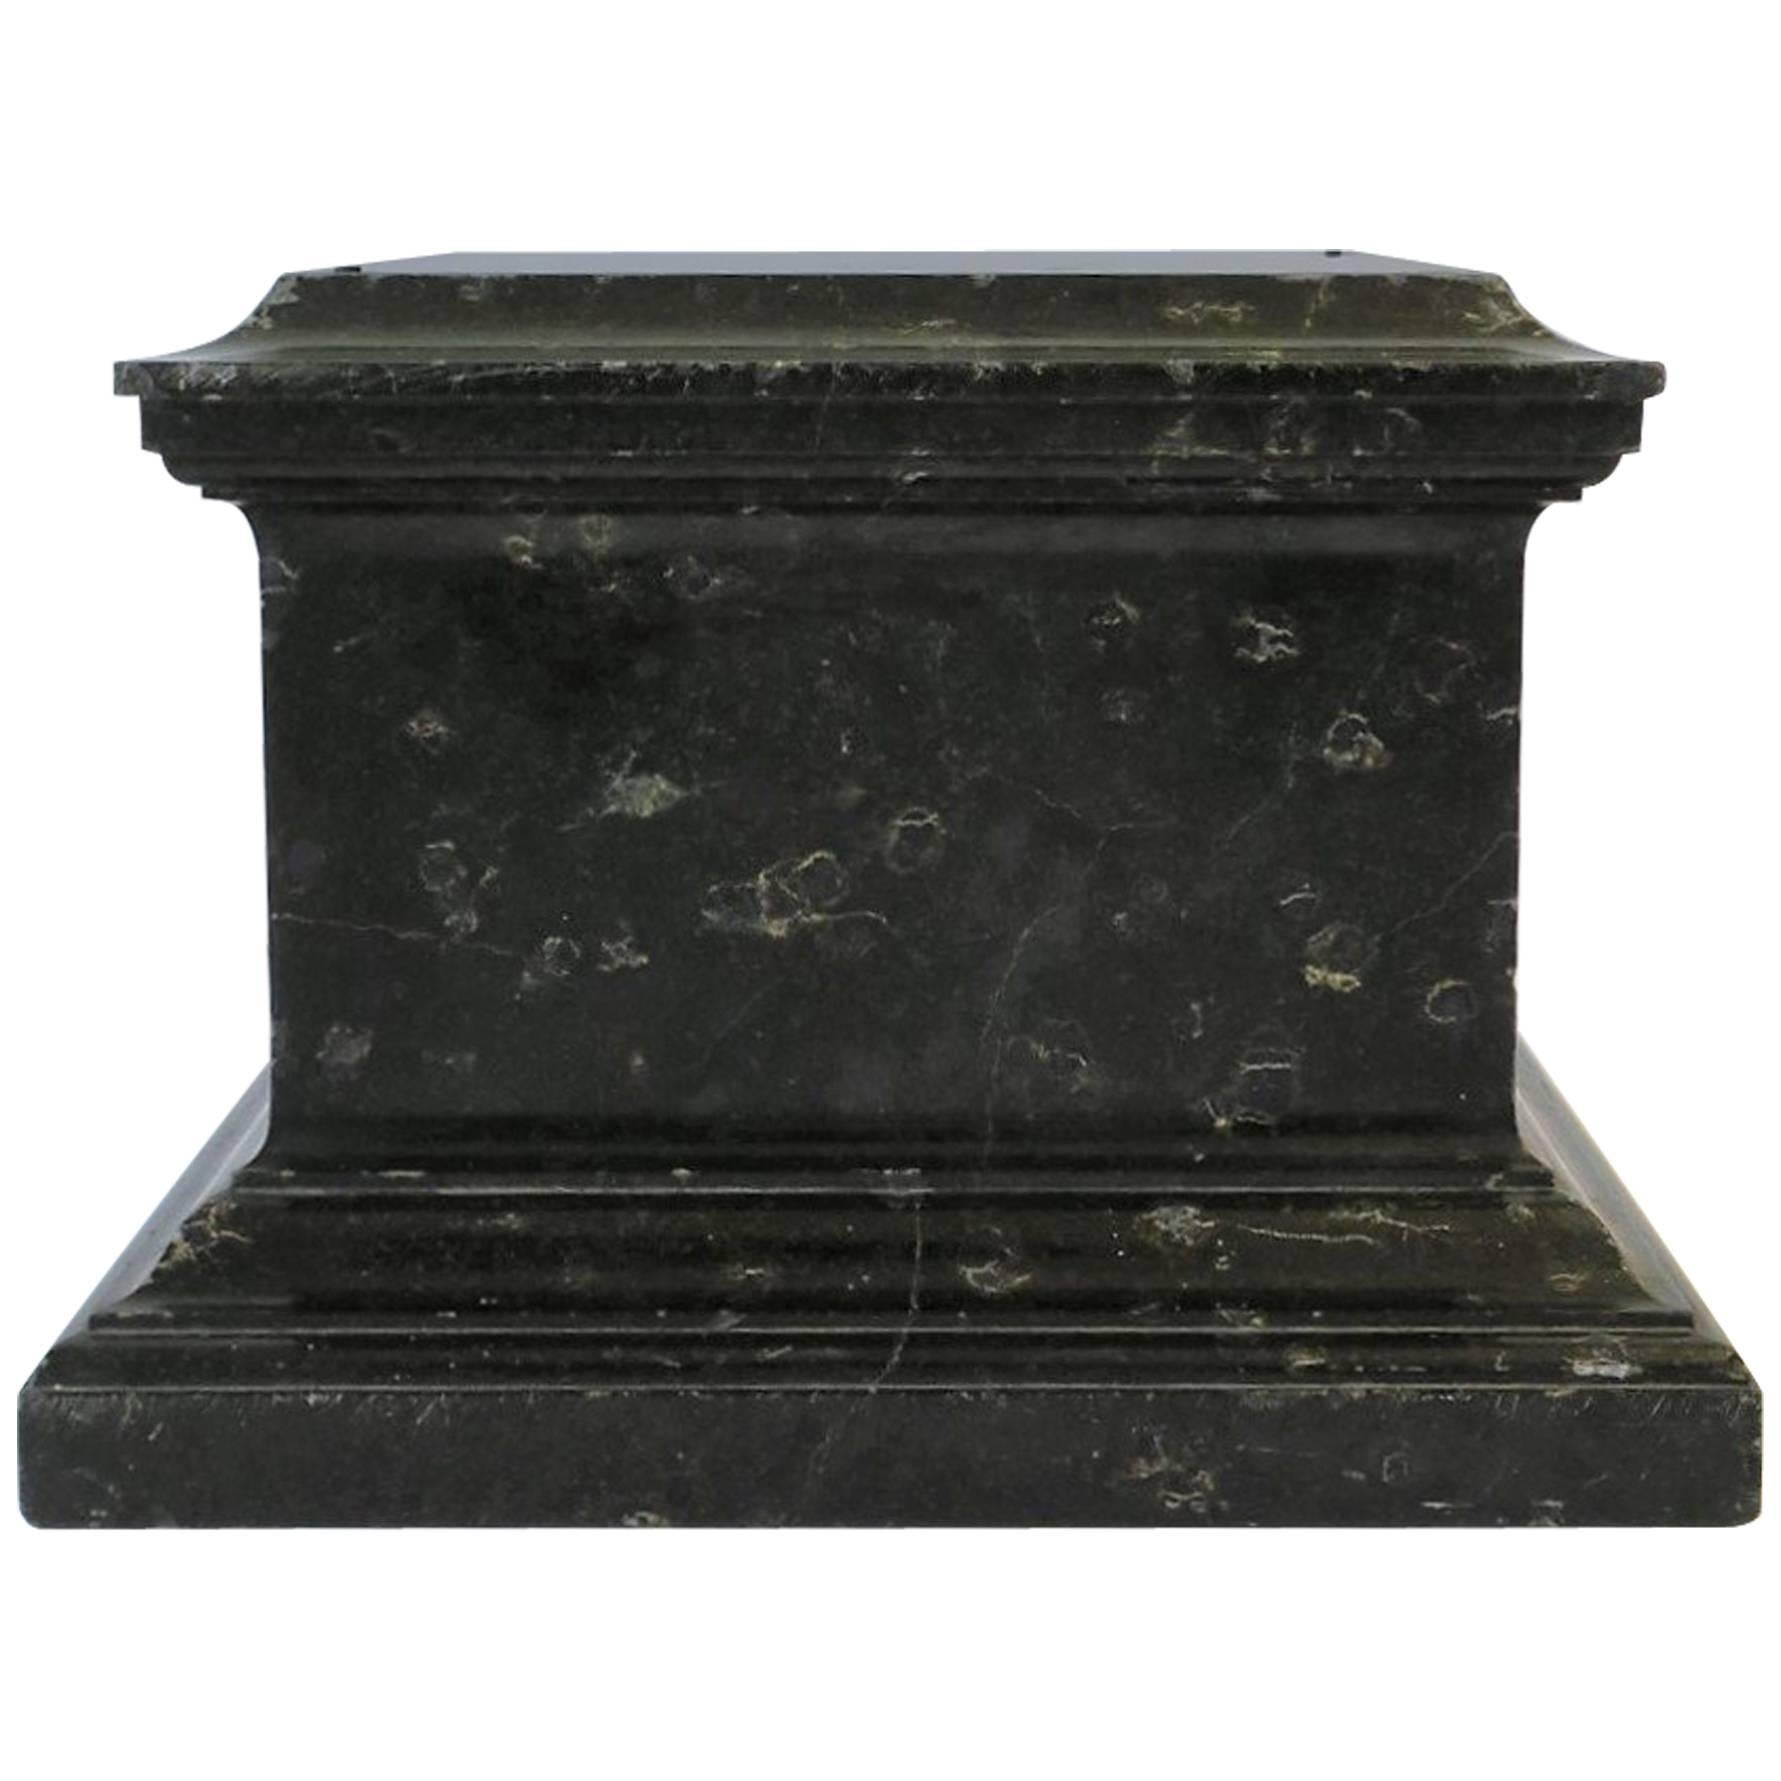 Black Marble Pedestal Column or Plinth Base, Late 19th Century